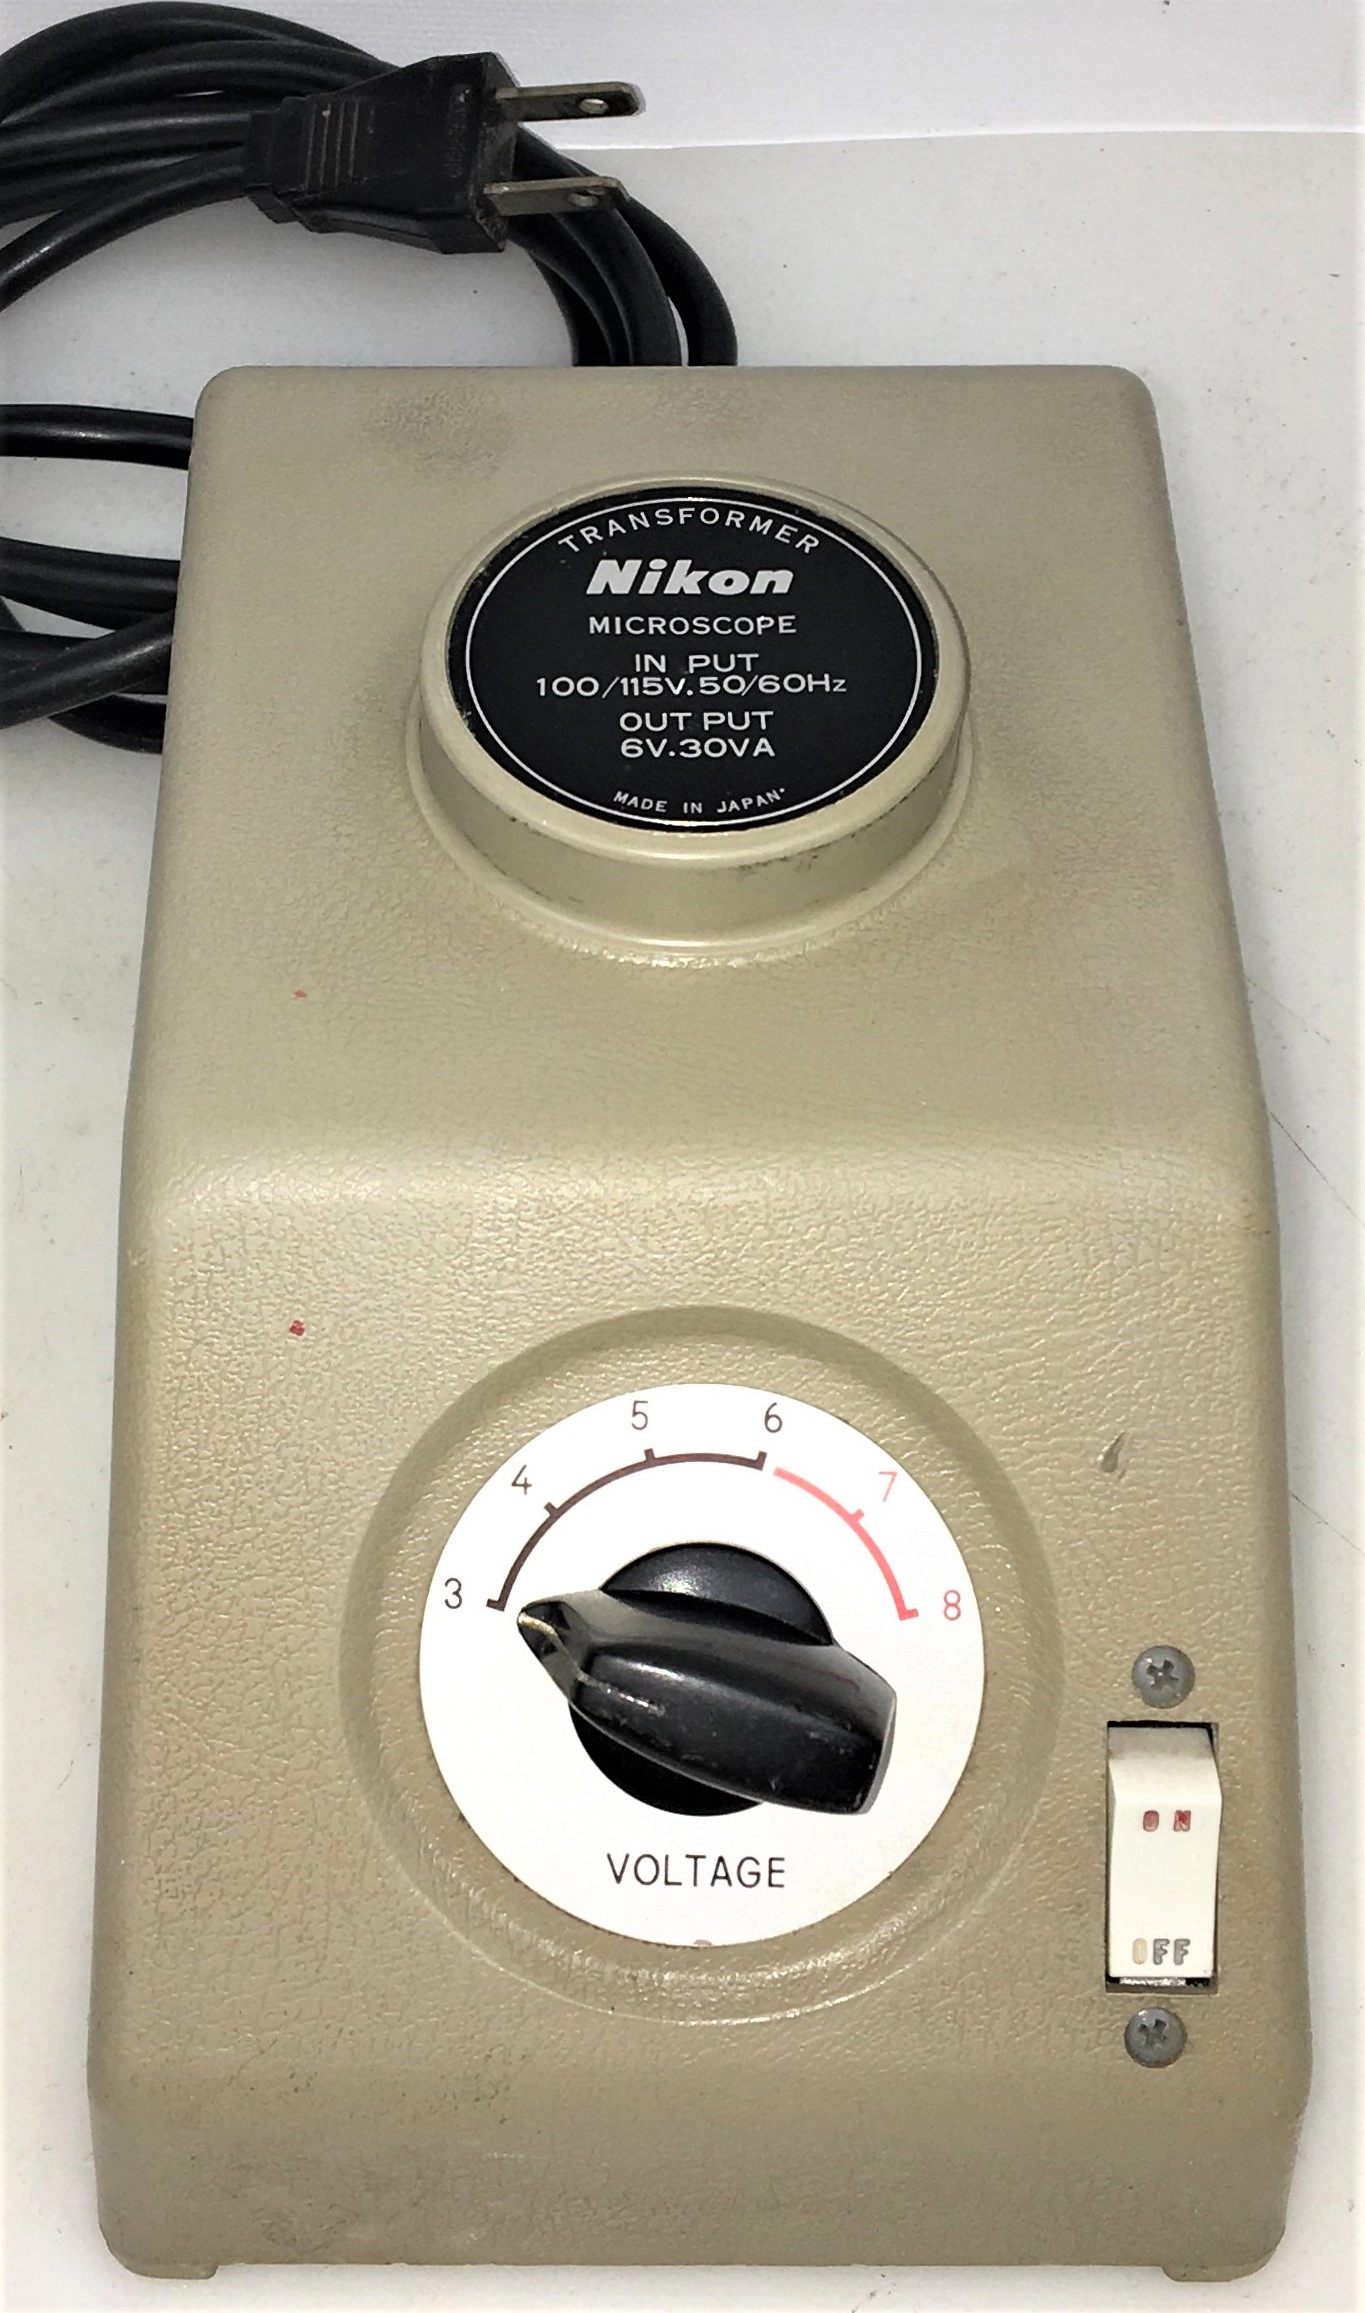 Nikon SN Microscope Transformer